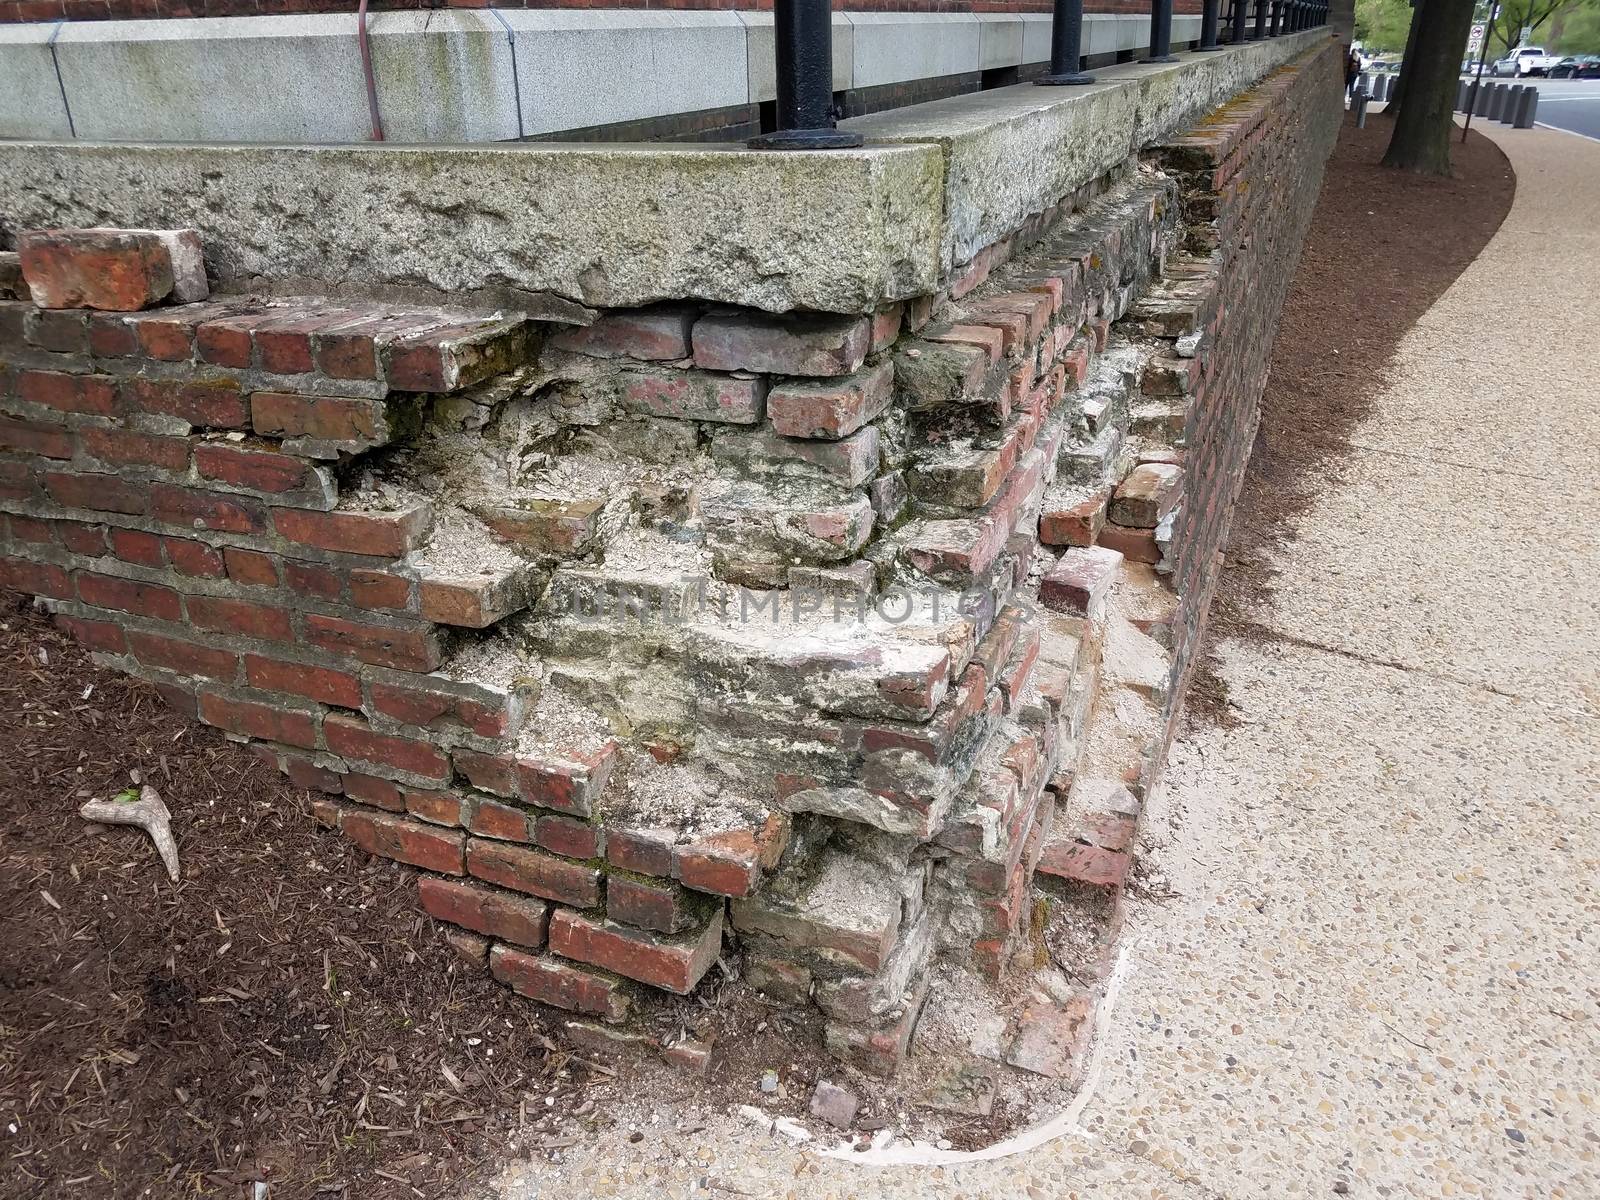 broken or damaged brick wall or masonry with cement sidewalk